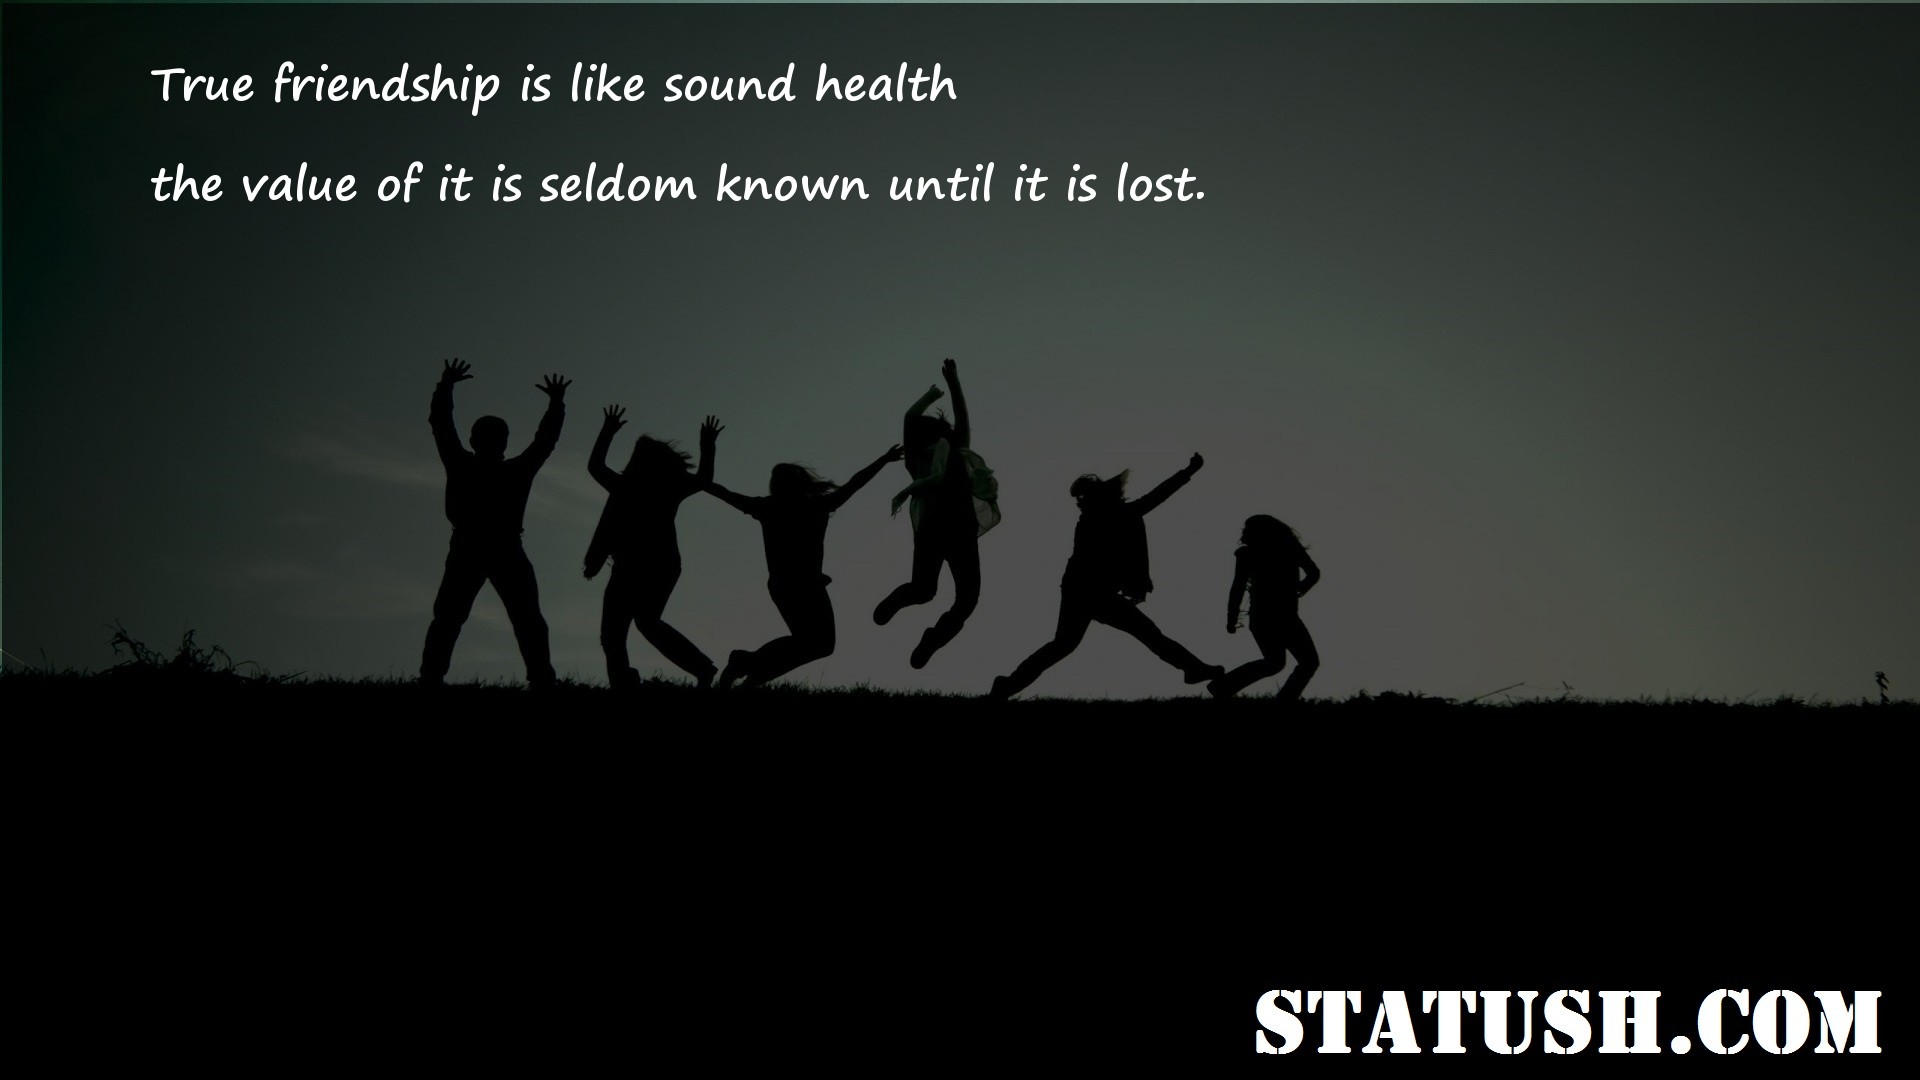 True friendship is like sound health